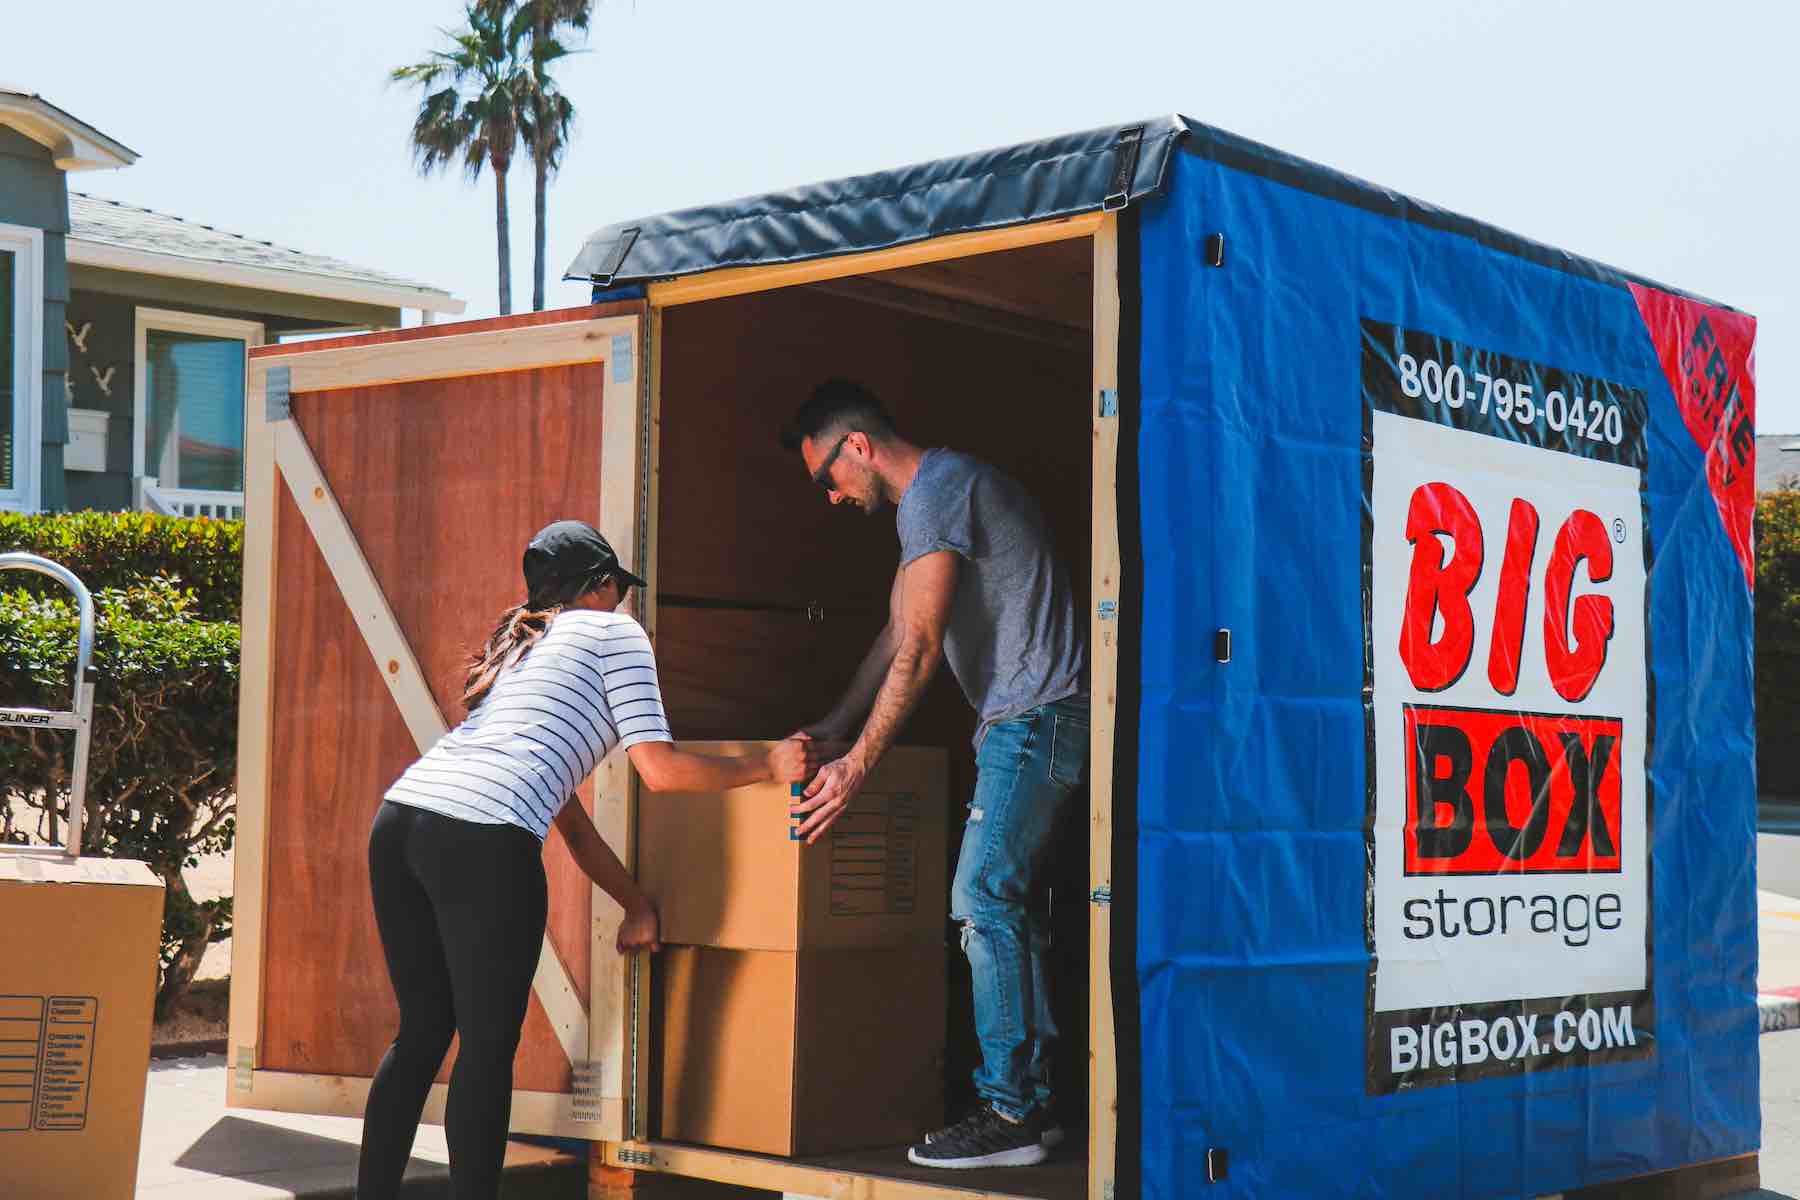 La Jolla residents using their Big Box for storage